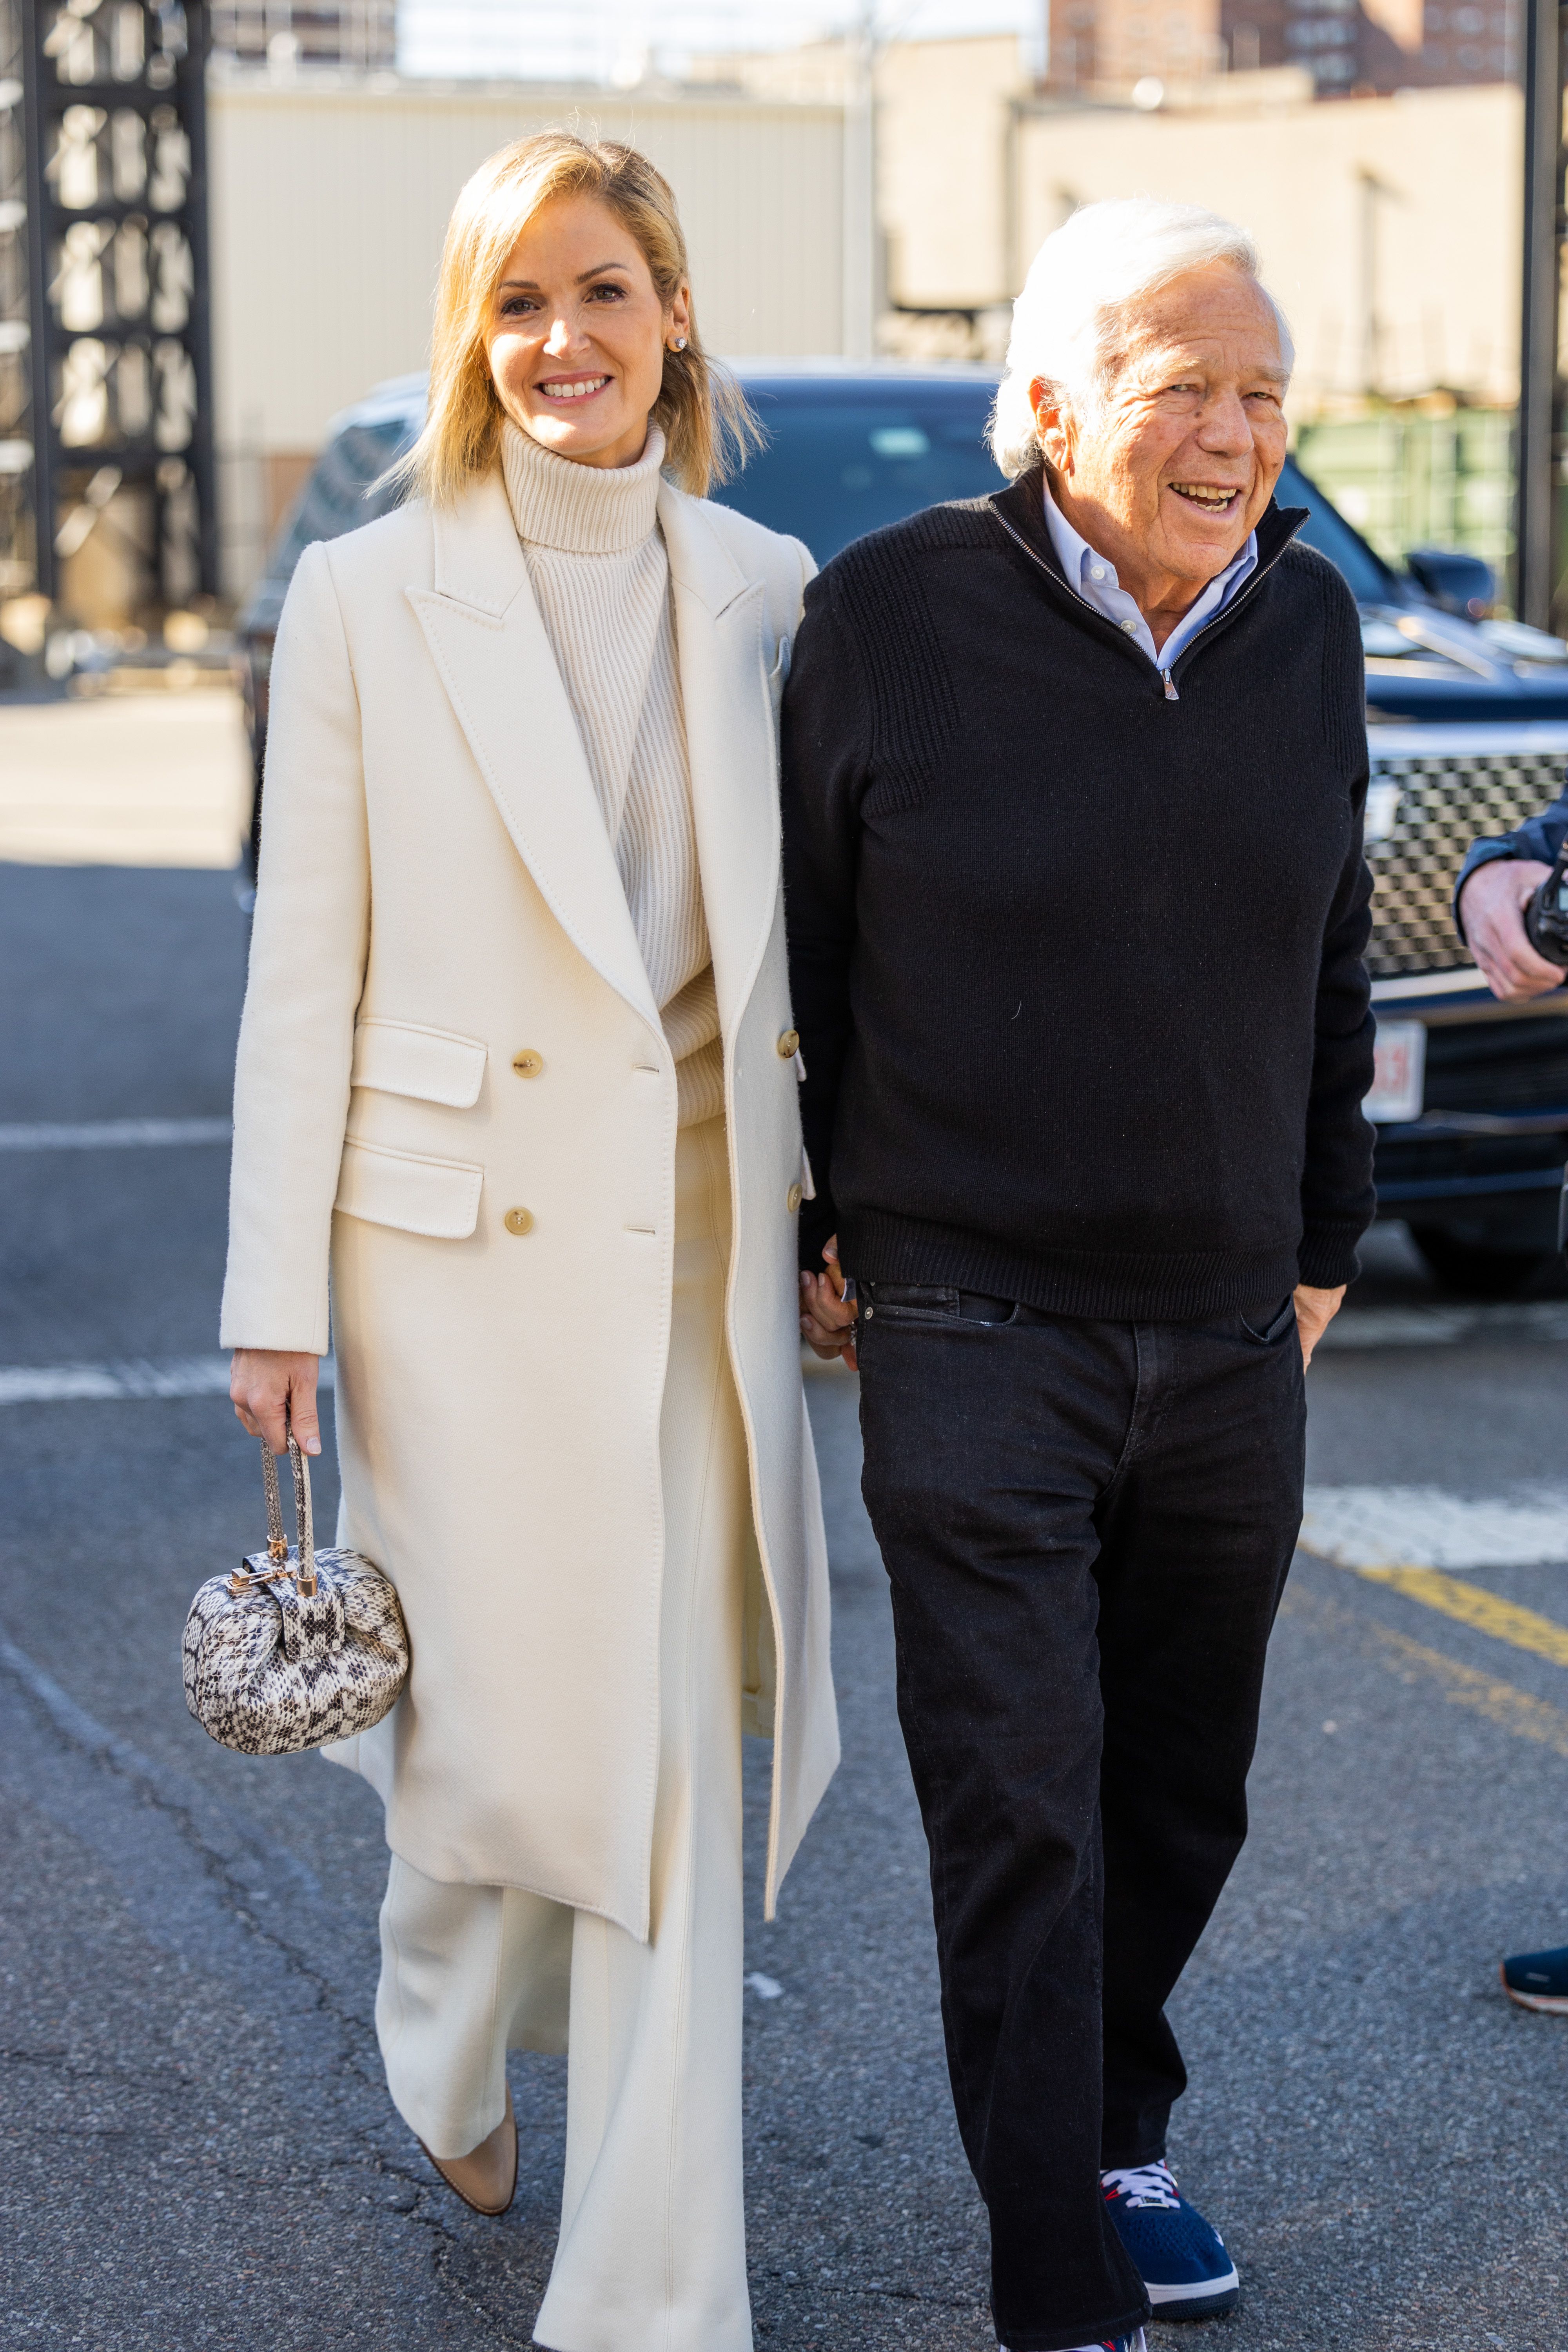 Dana Blumberg and Robert Kraft during New York Fashion Week on February 14, 2023, in New York City. | Source: Getty Images